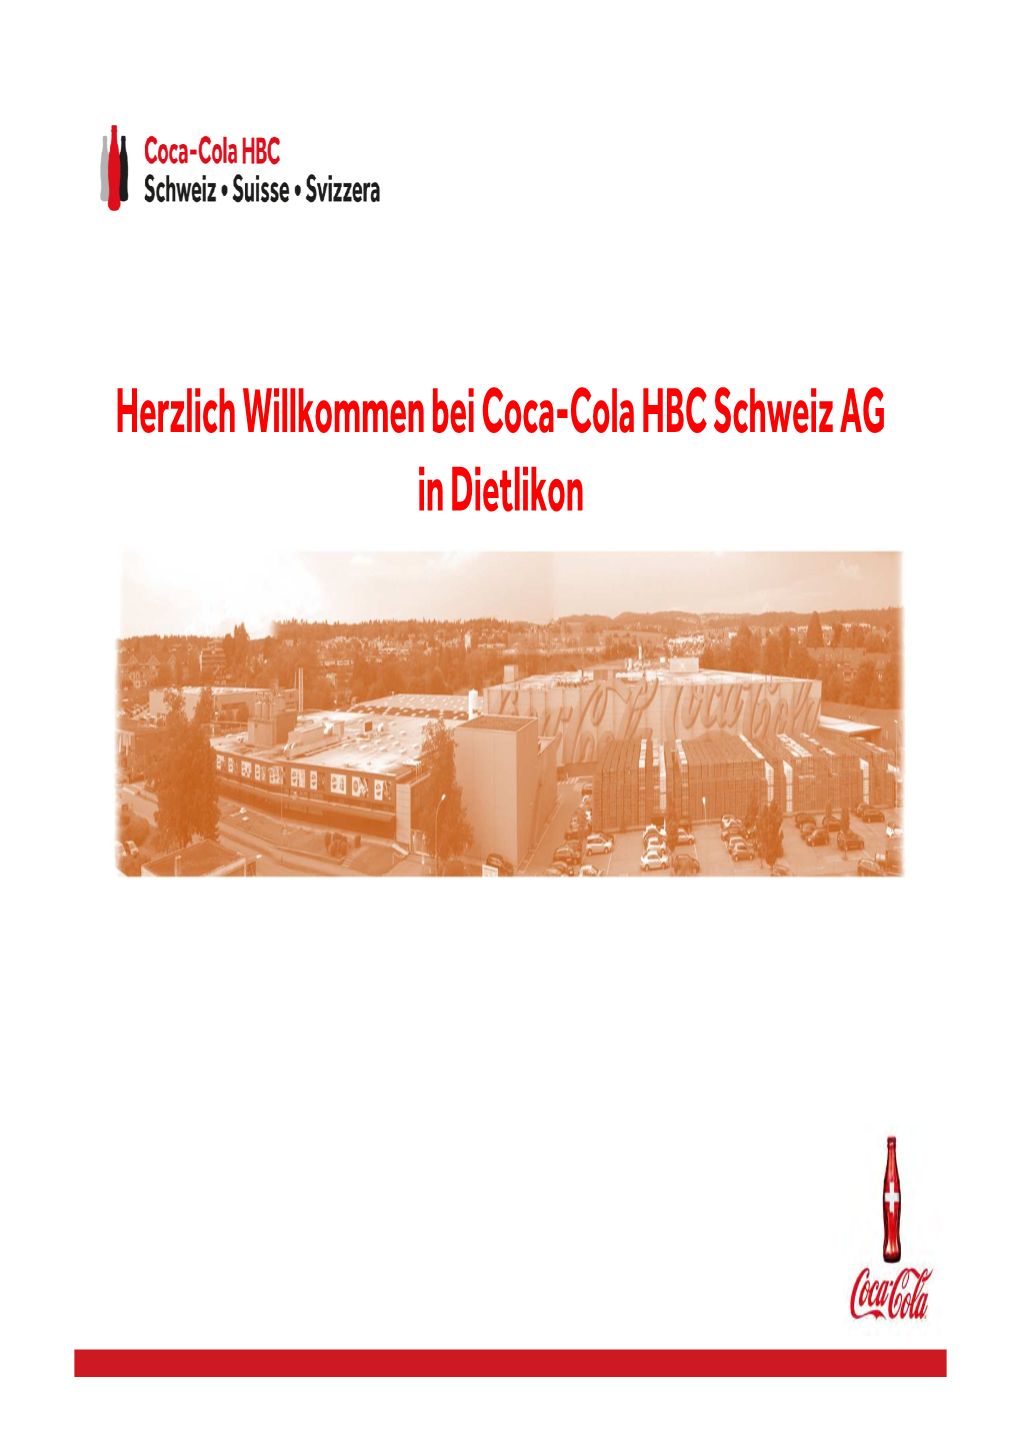 Patrick Wittweiler, Coca-Cola HBC Schweiz